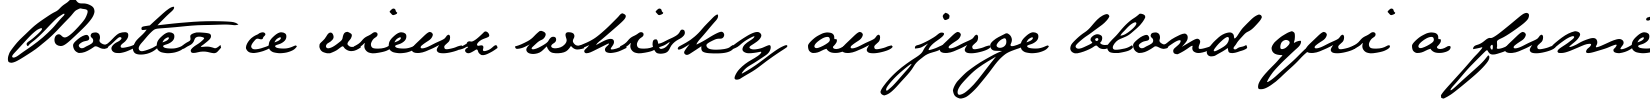 Пример написания шрифтом JaneAusten текста на французском